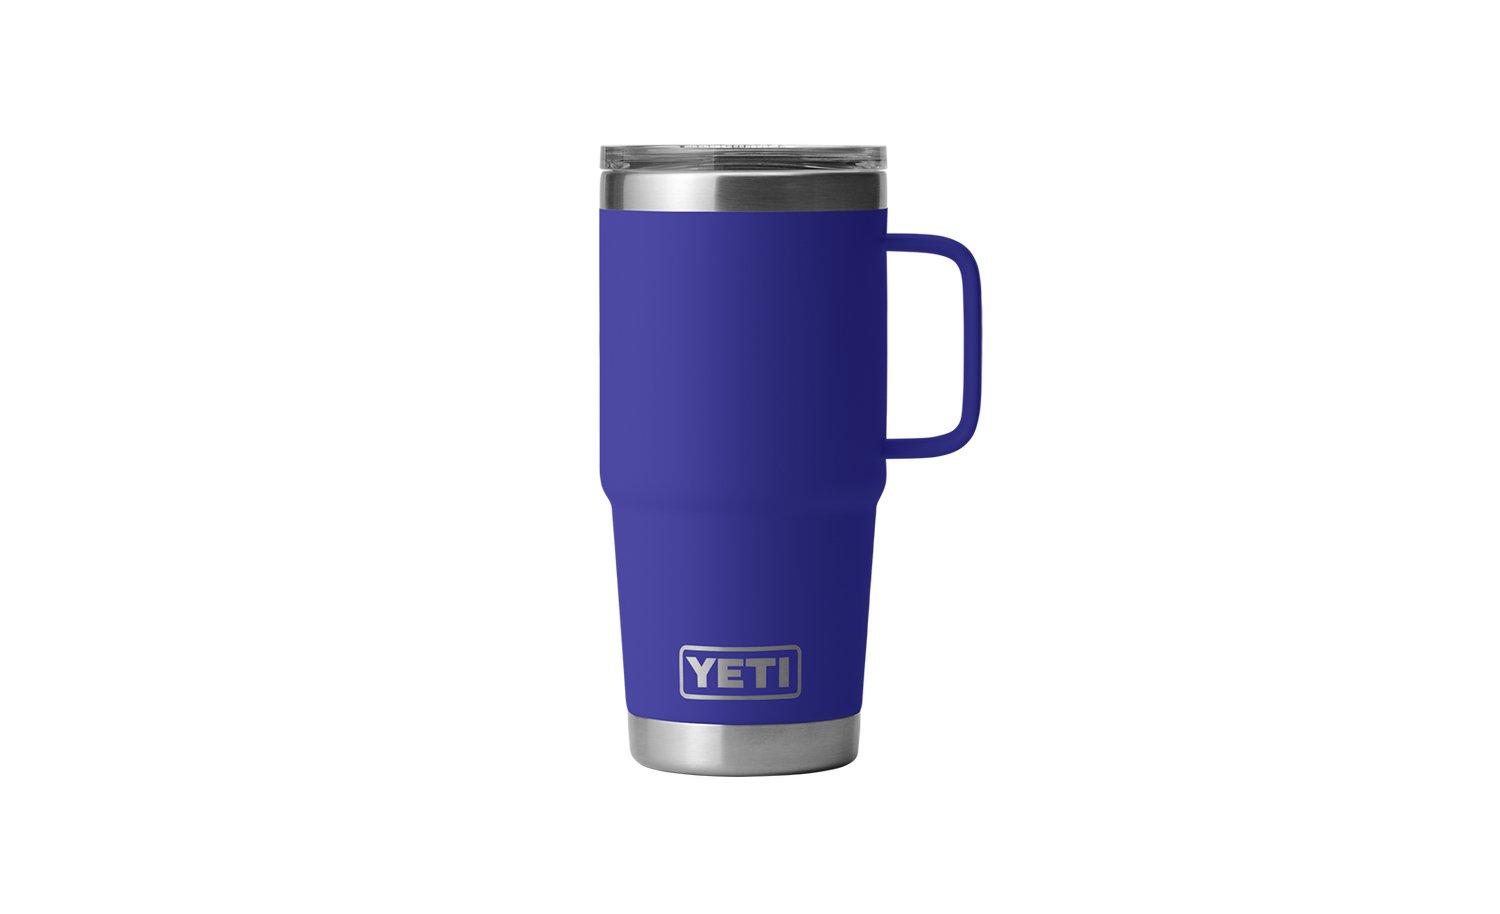 Blue YETI Rambler Mug